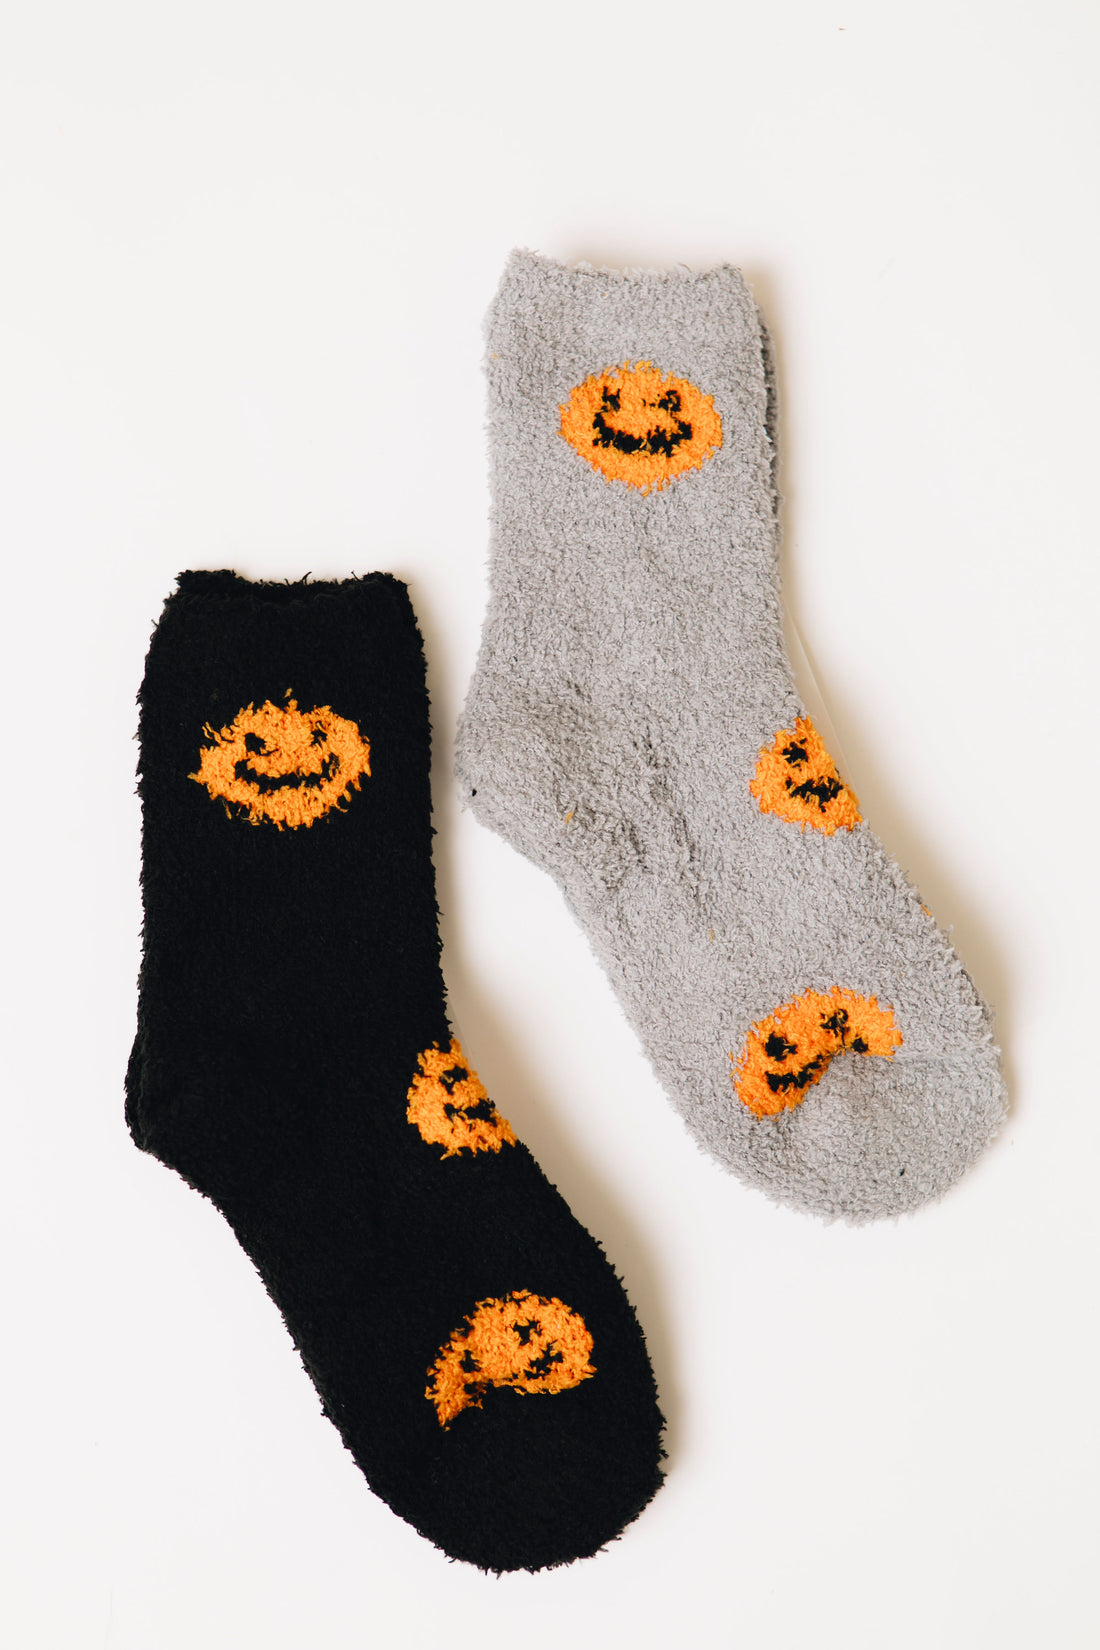 Doorbuster - Smiley Face Cozy Plush Socks (OS)